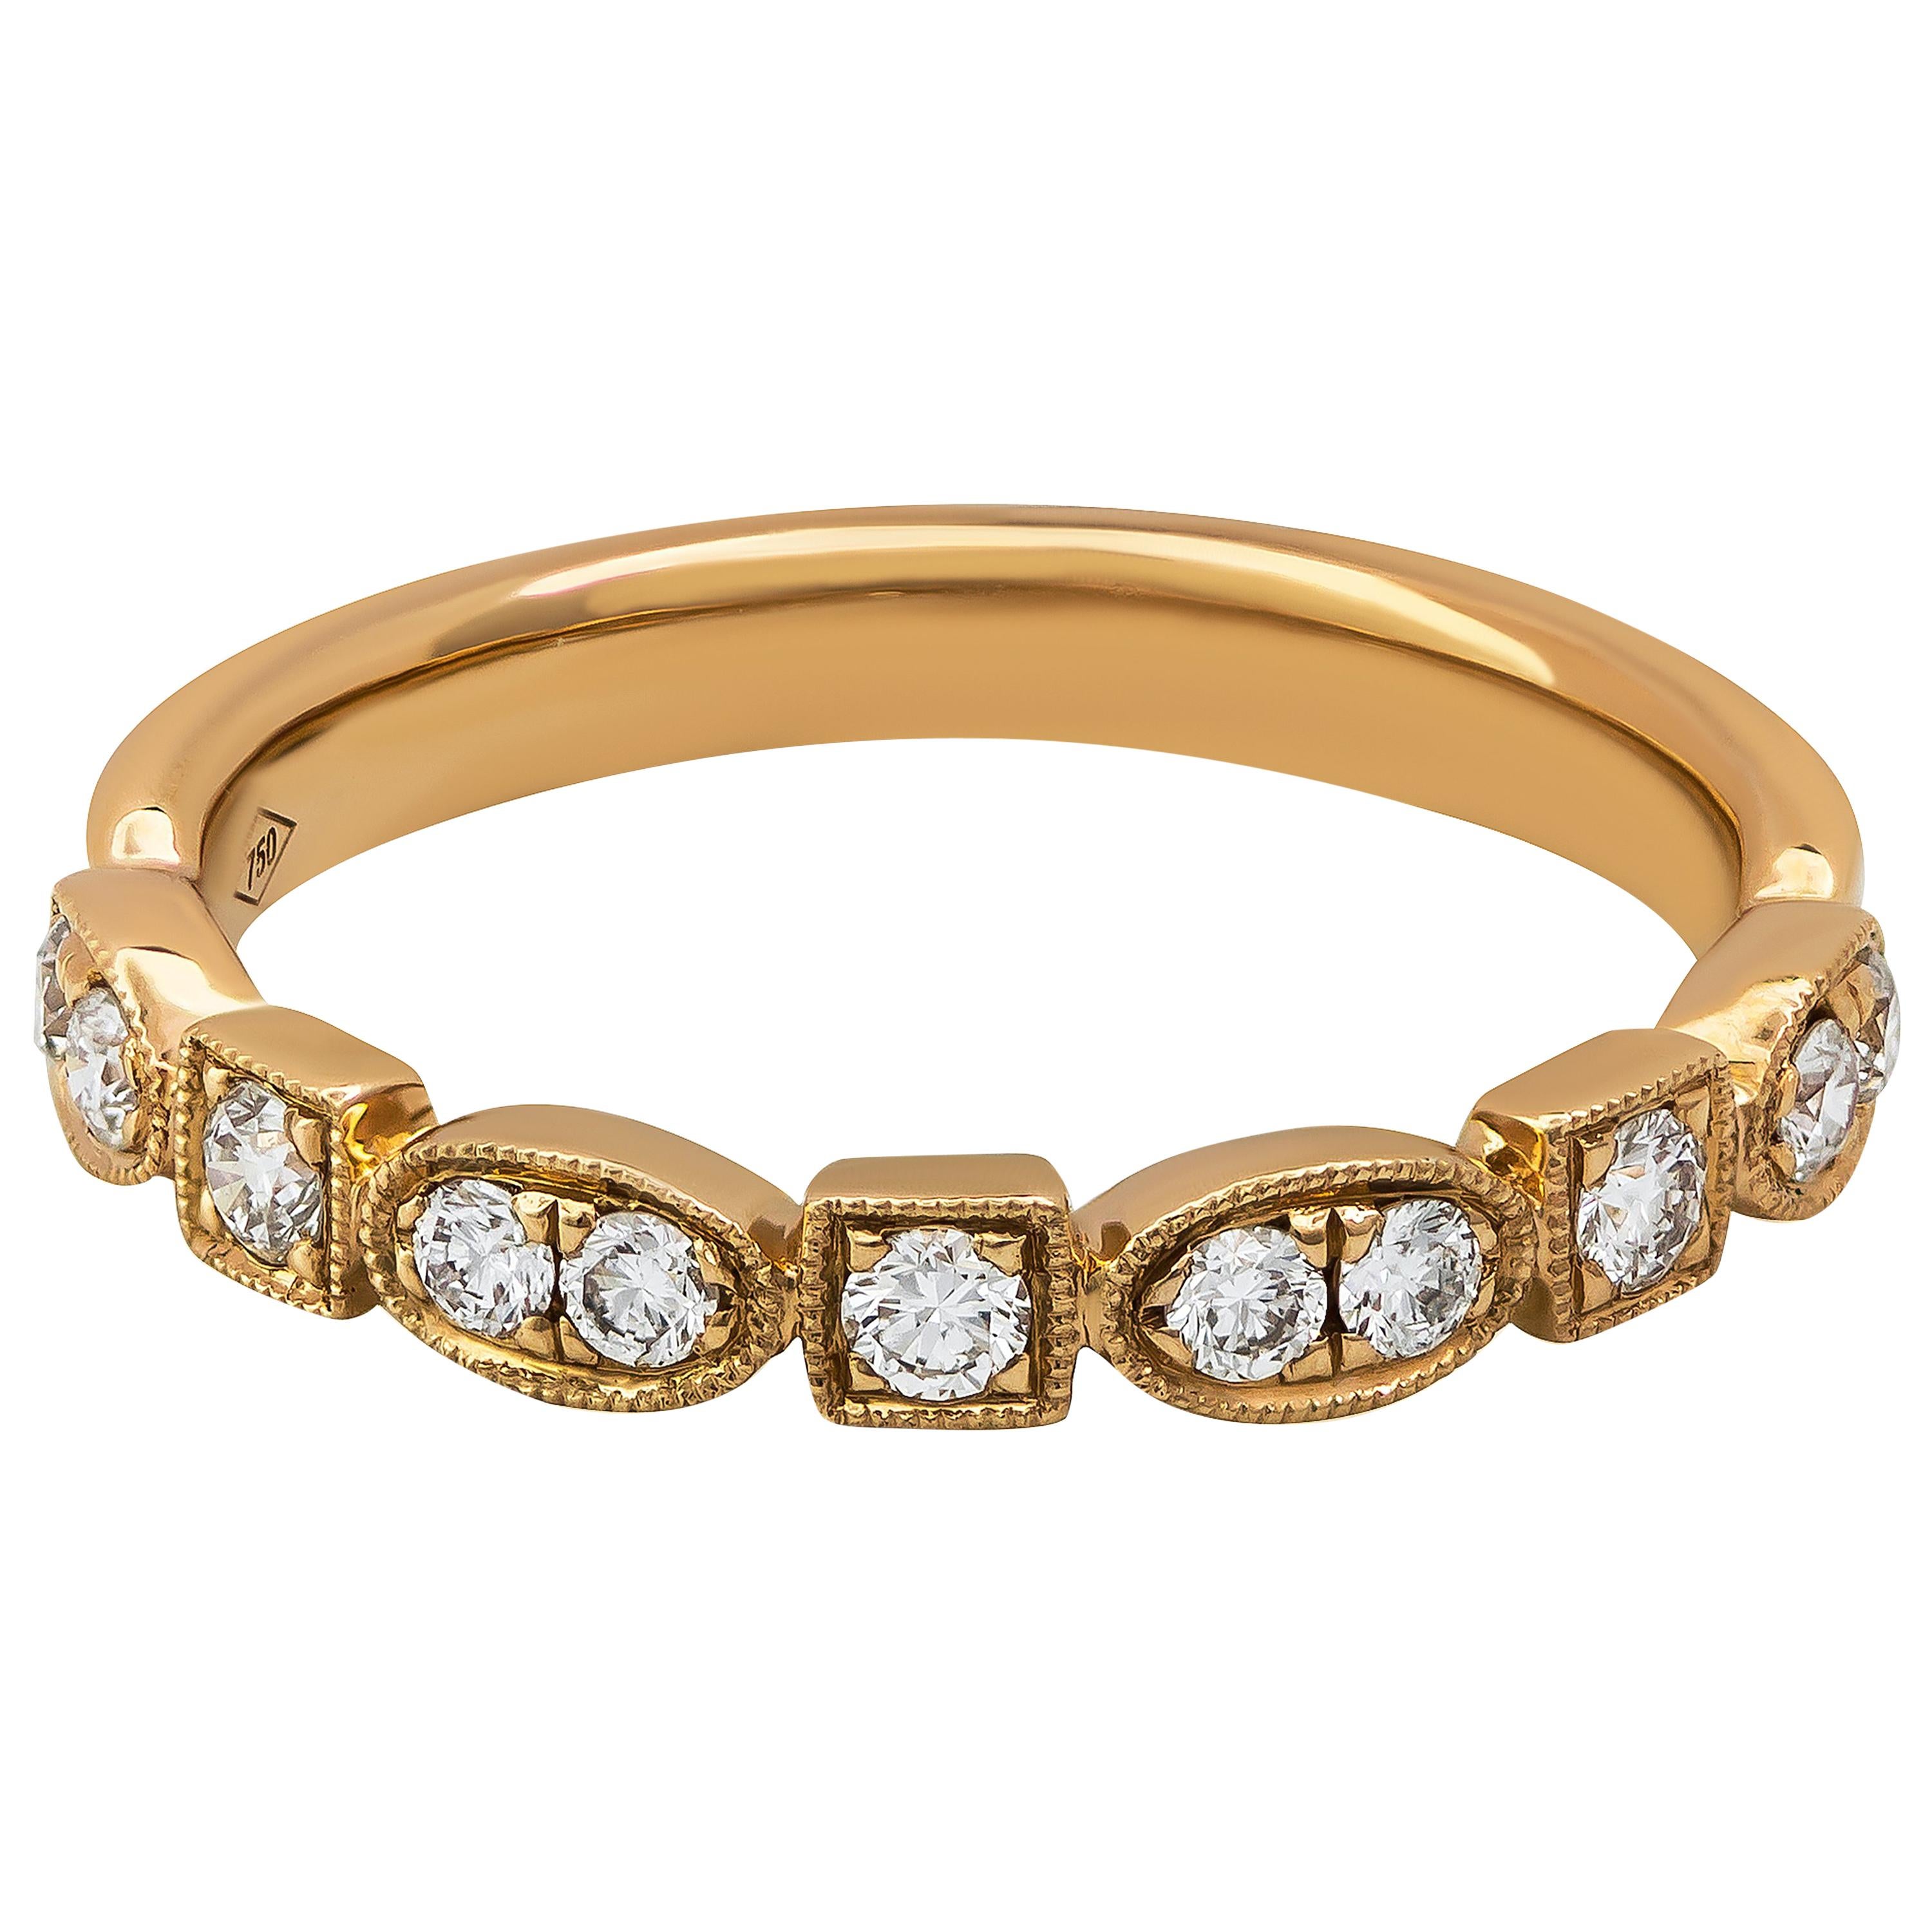 Roman Malakov Antique Style 0.31 Carat Diamond Wedding Band in Rose Gold